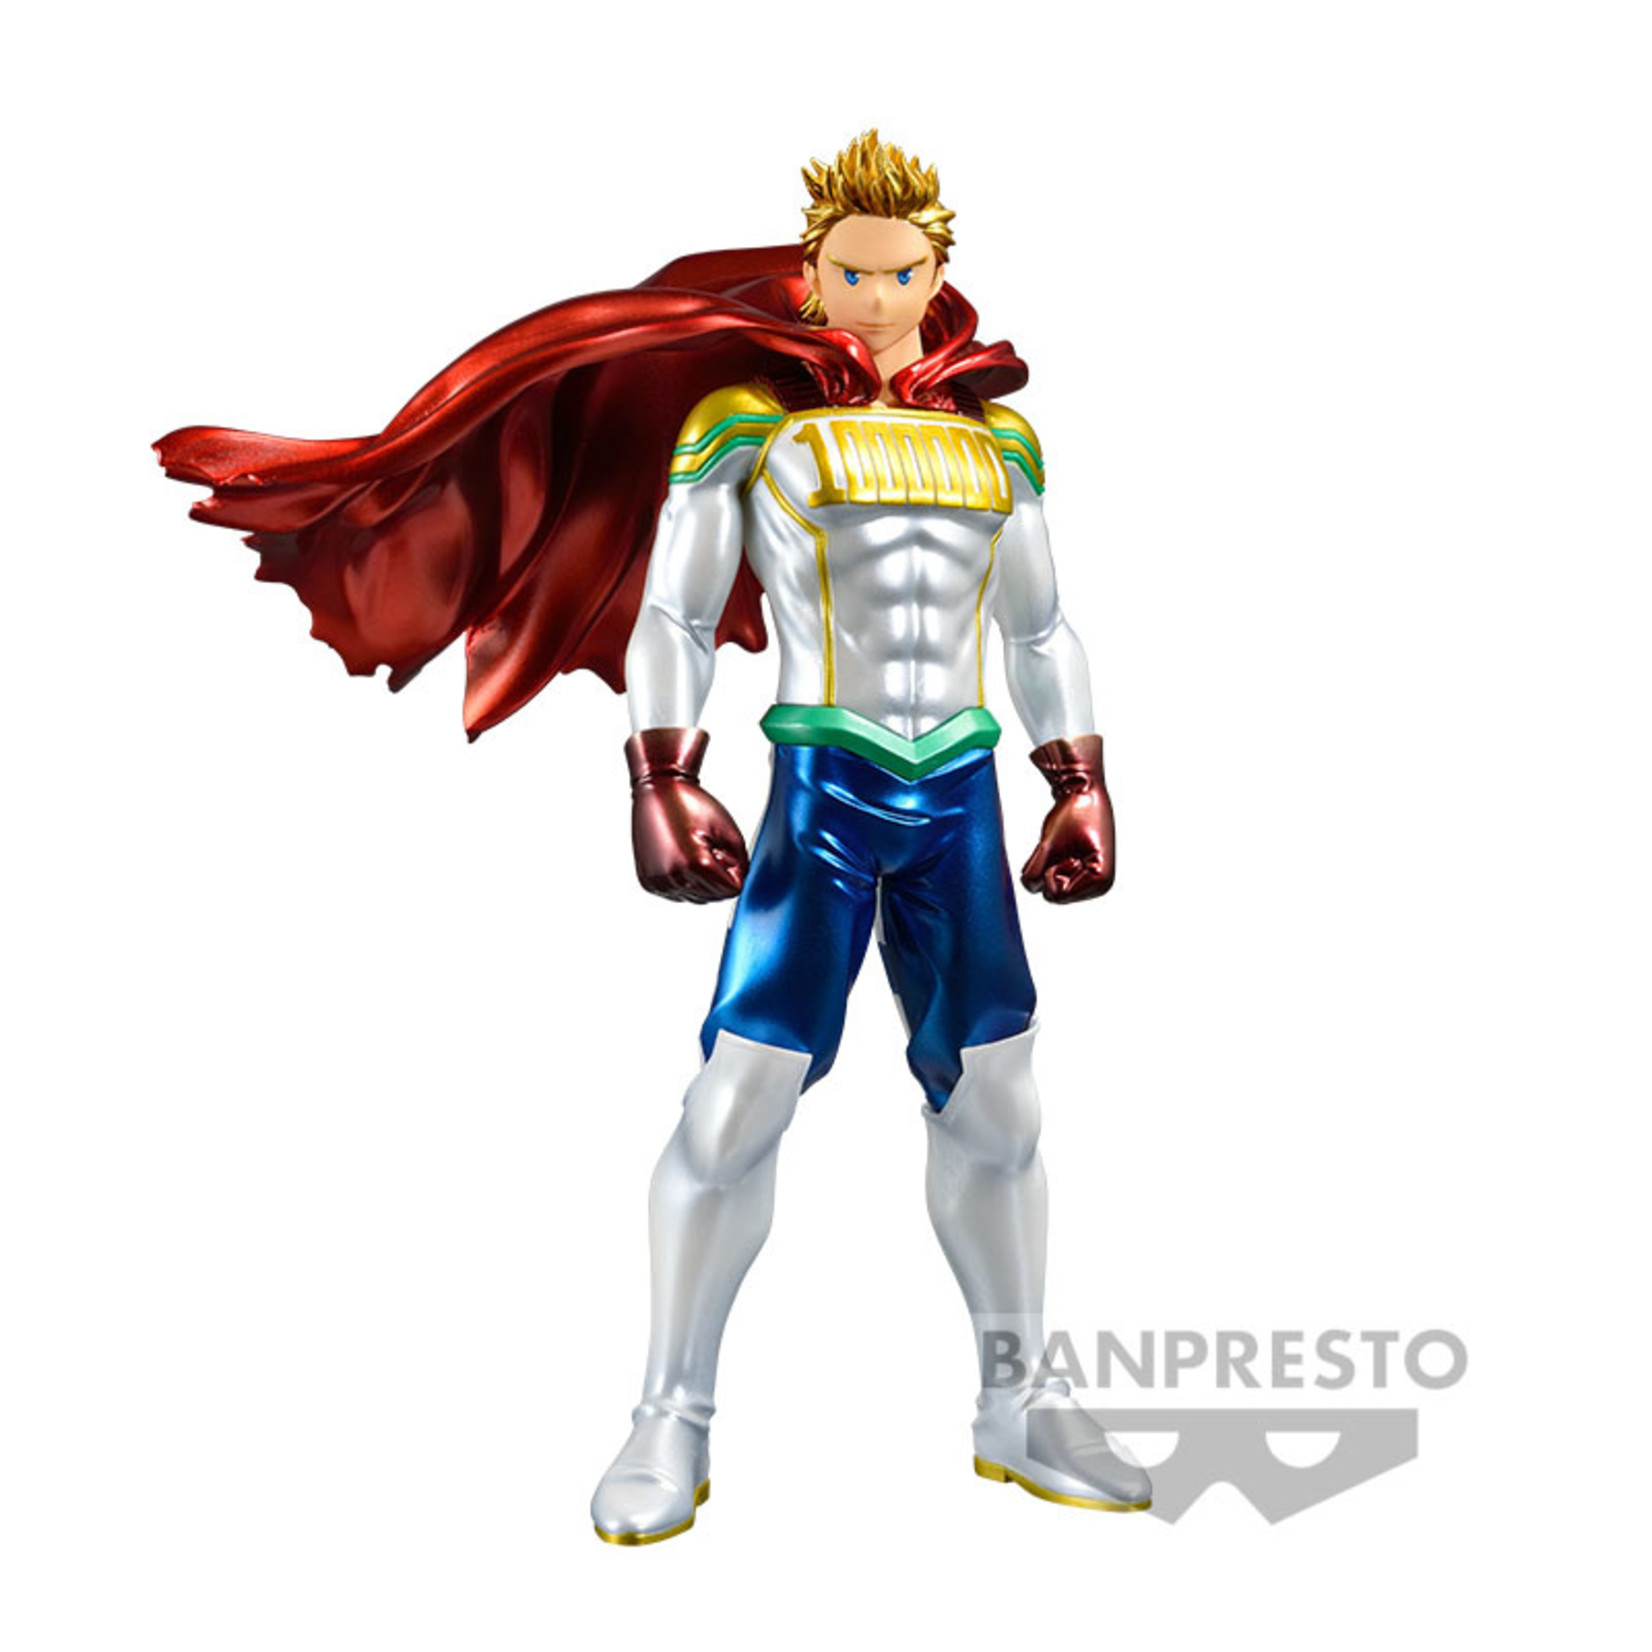 Banpresto *****Banpresto - My Hero Academia Age of Heroes - Lemillion (Special)